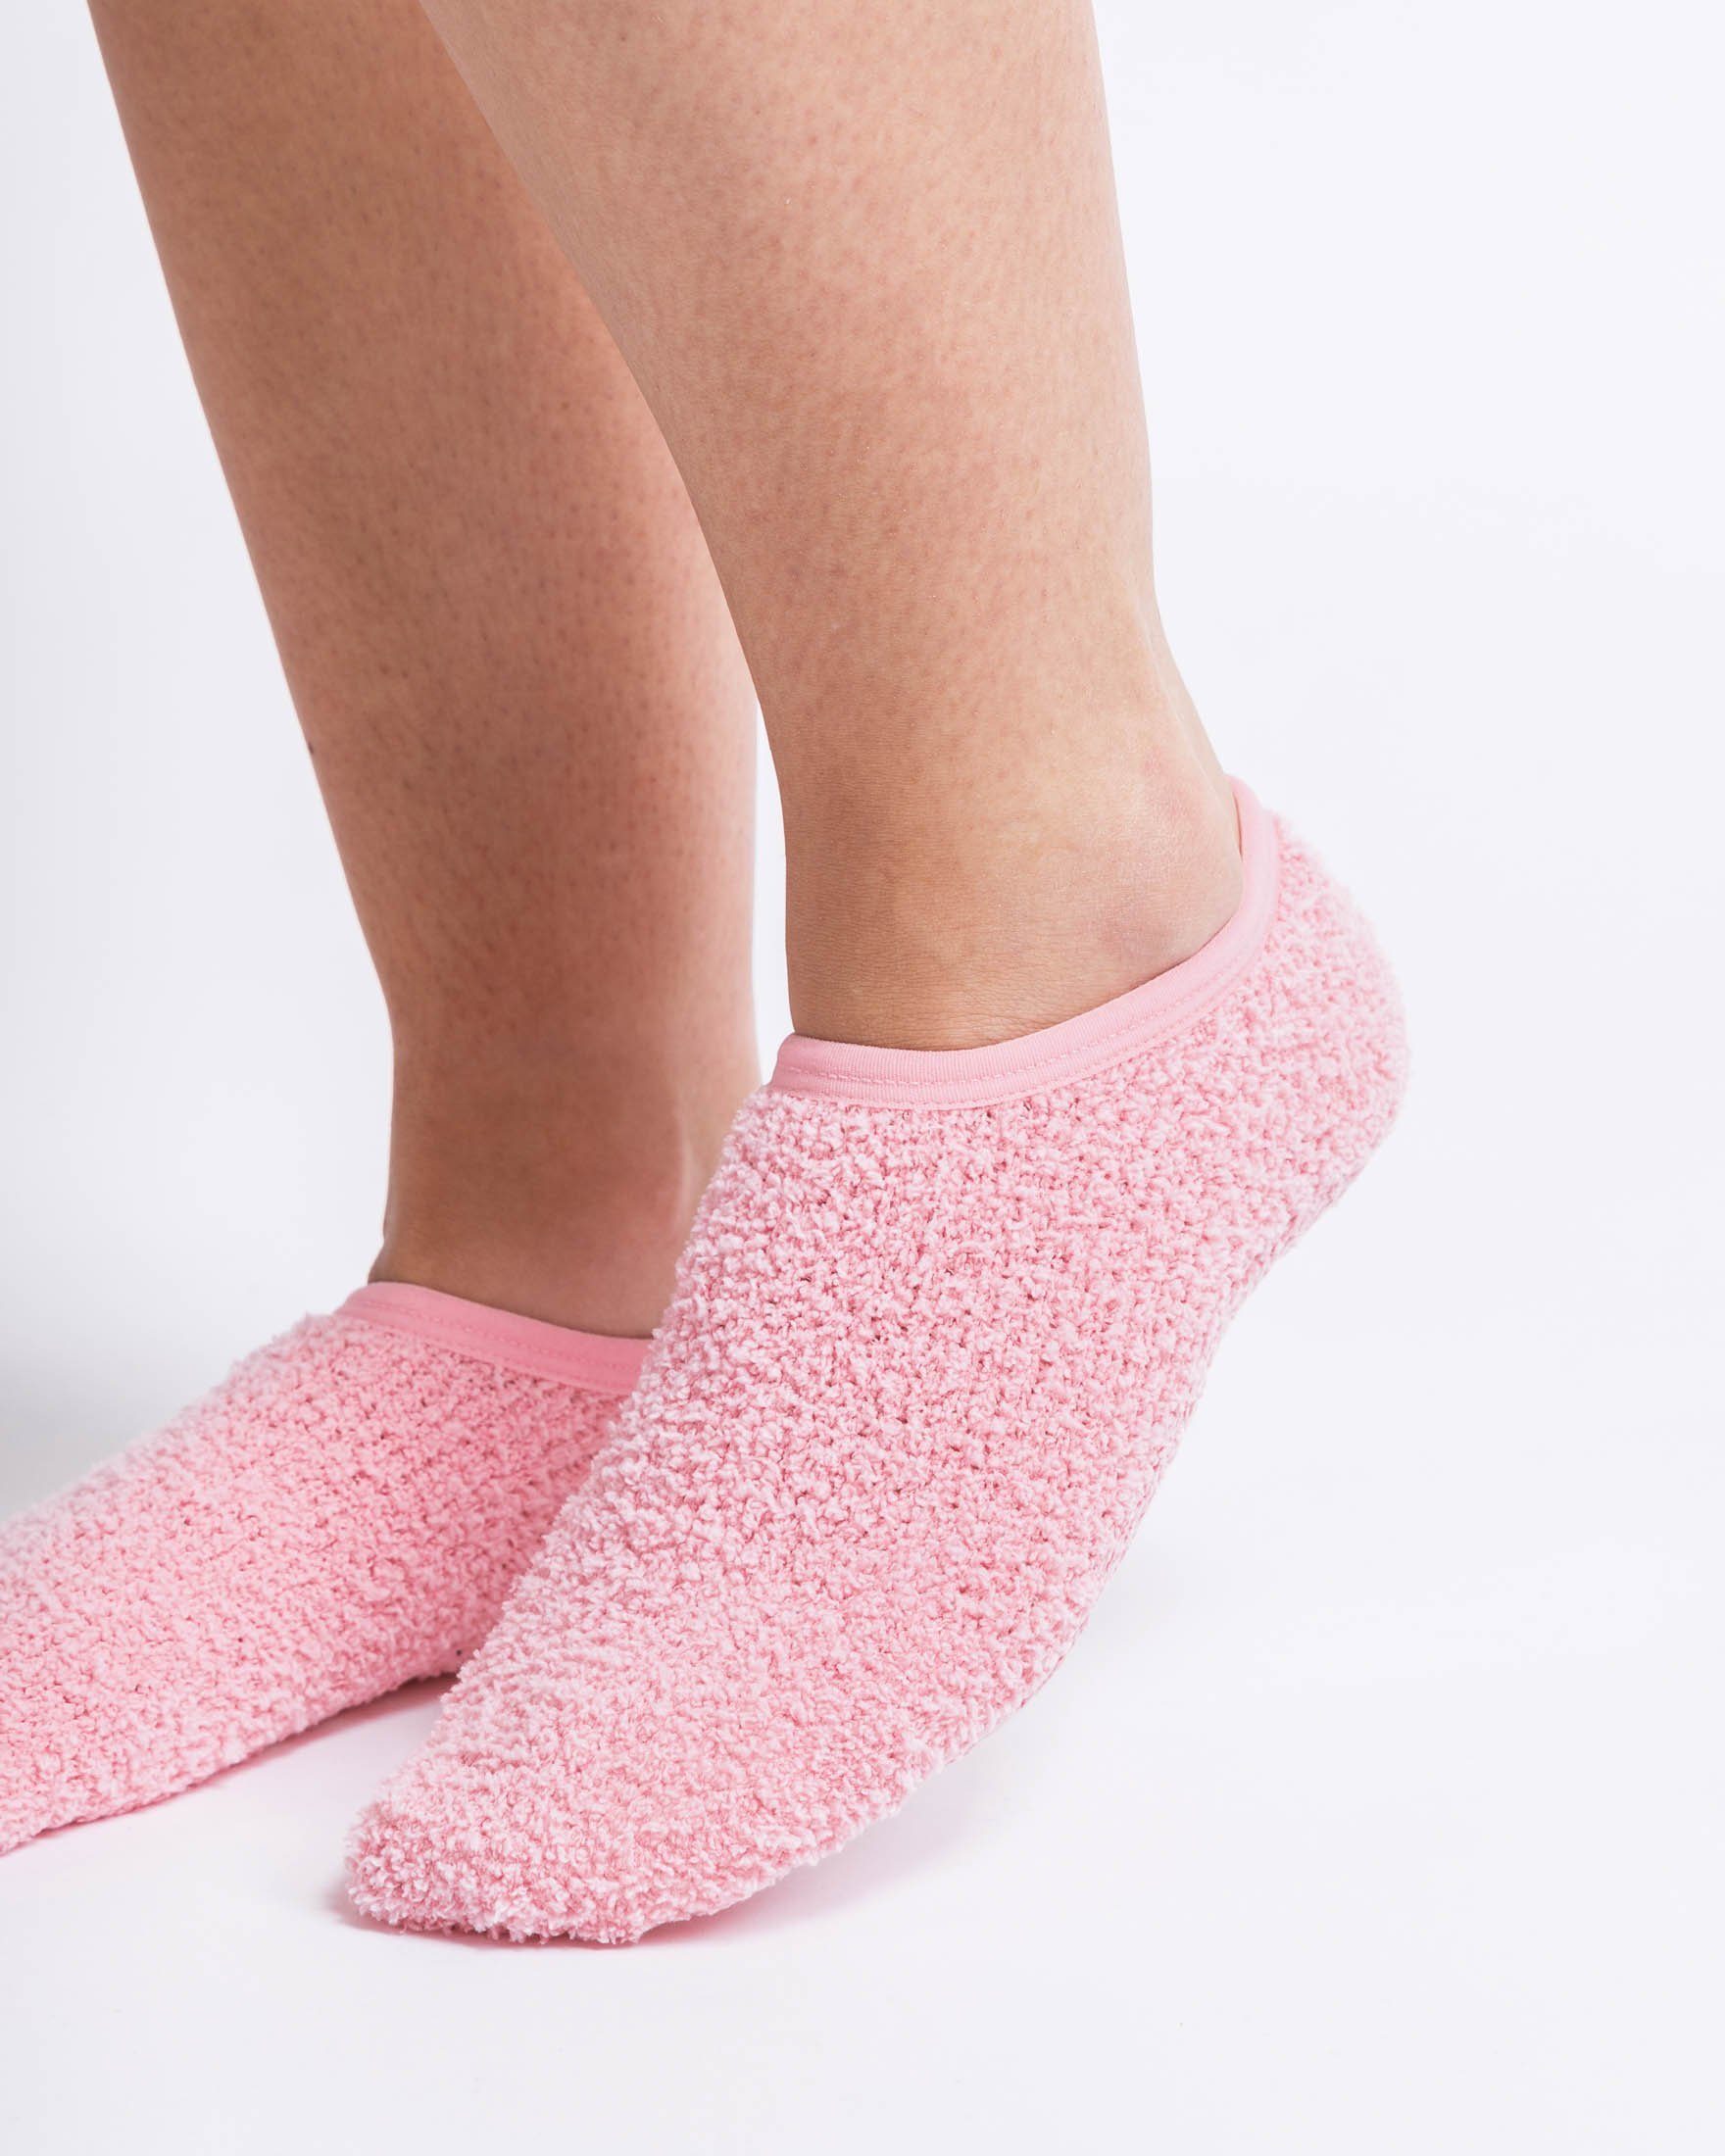 SNOCKS Füßlinge Fluffy Invisible Socks Sneaker Socken Damen Herren (2-Paar)  Anti-Rutsch-Socken, kuschelig weich für den Winter